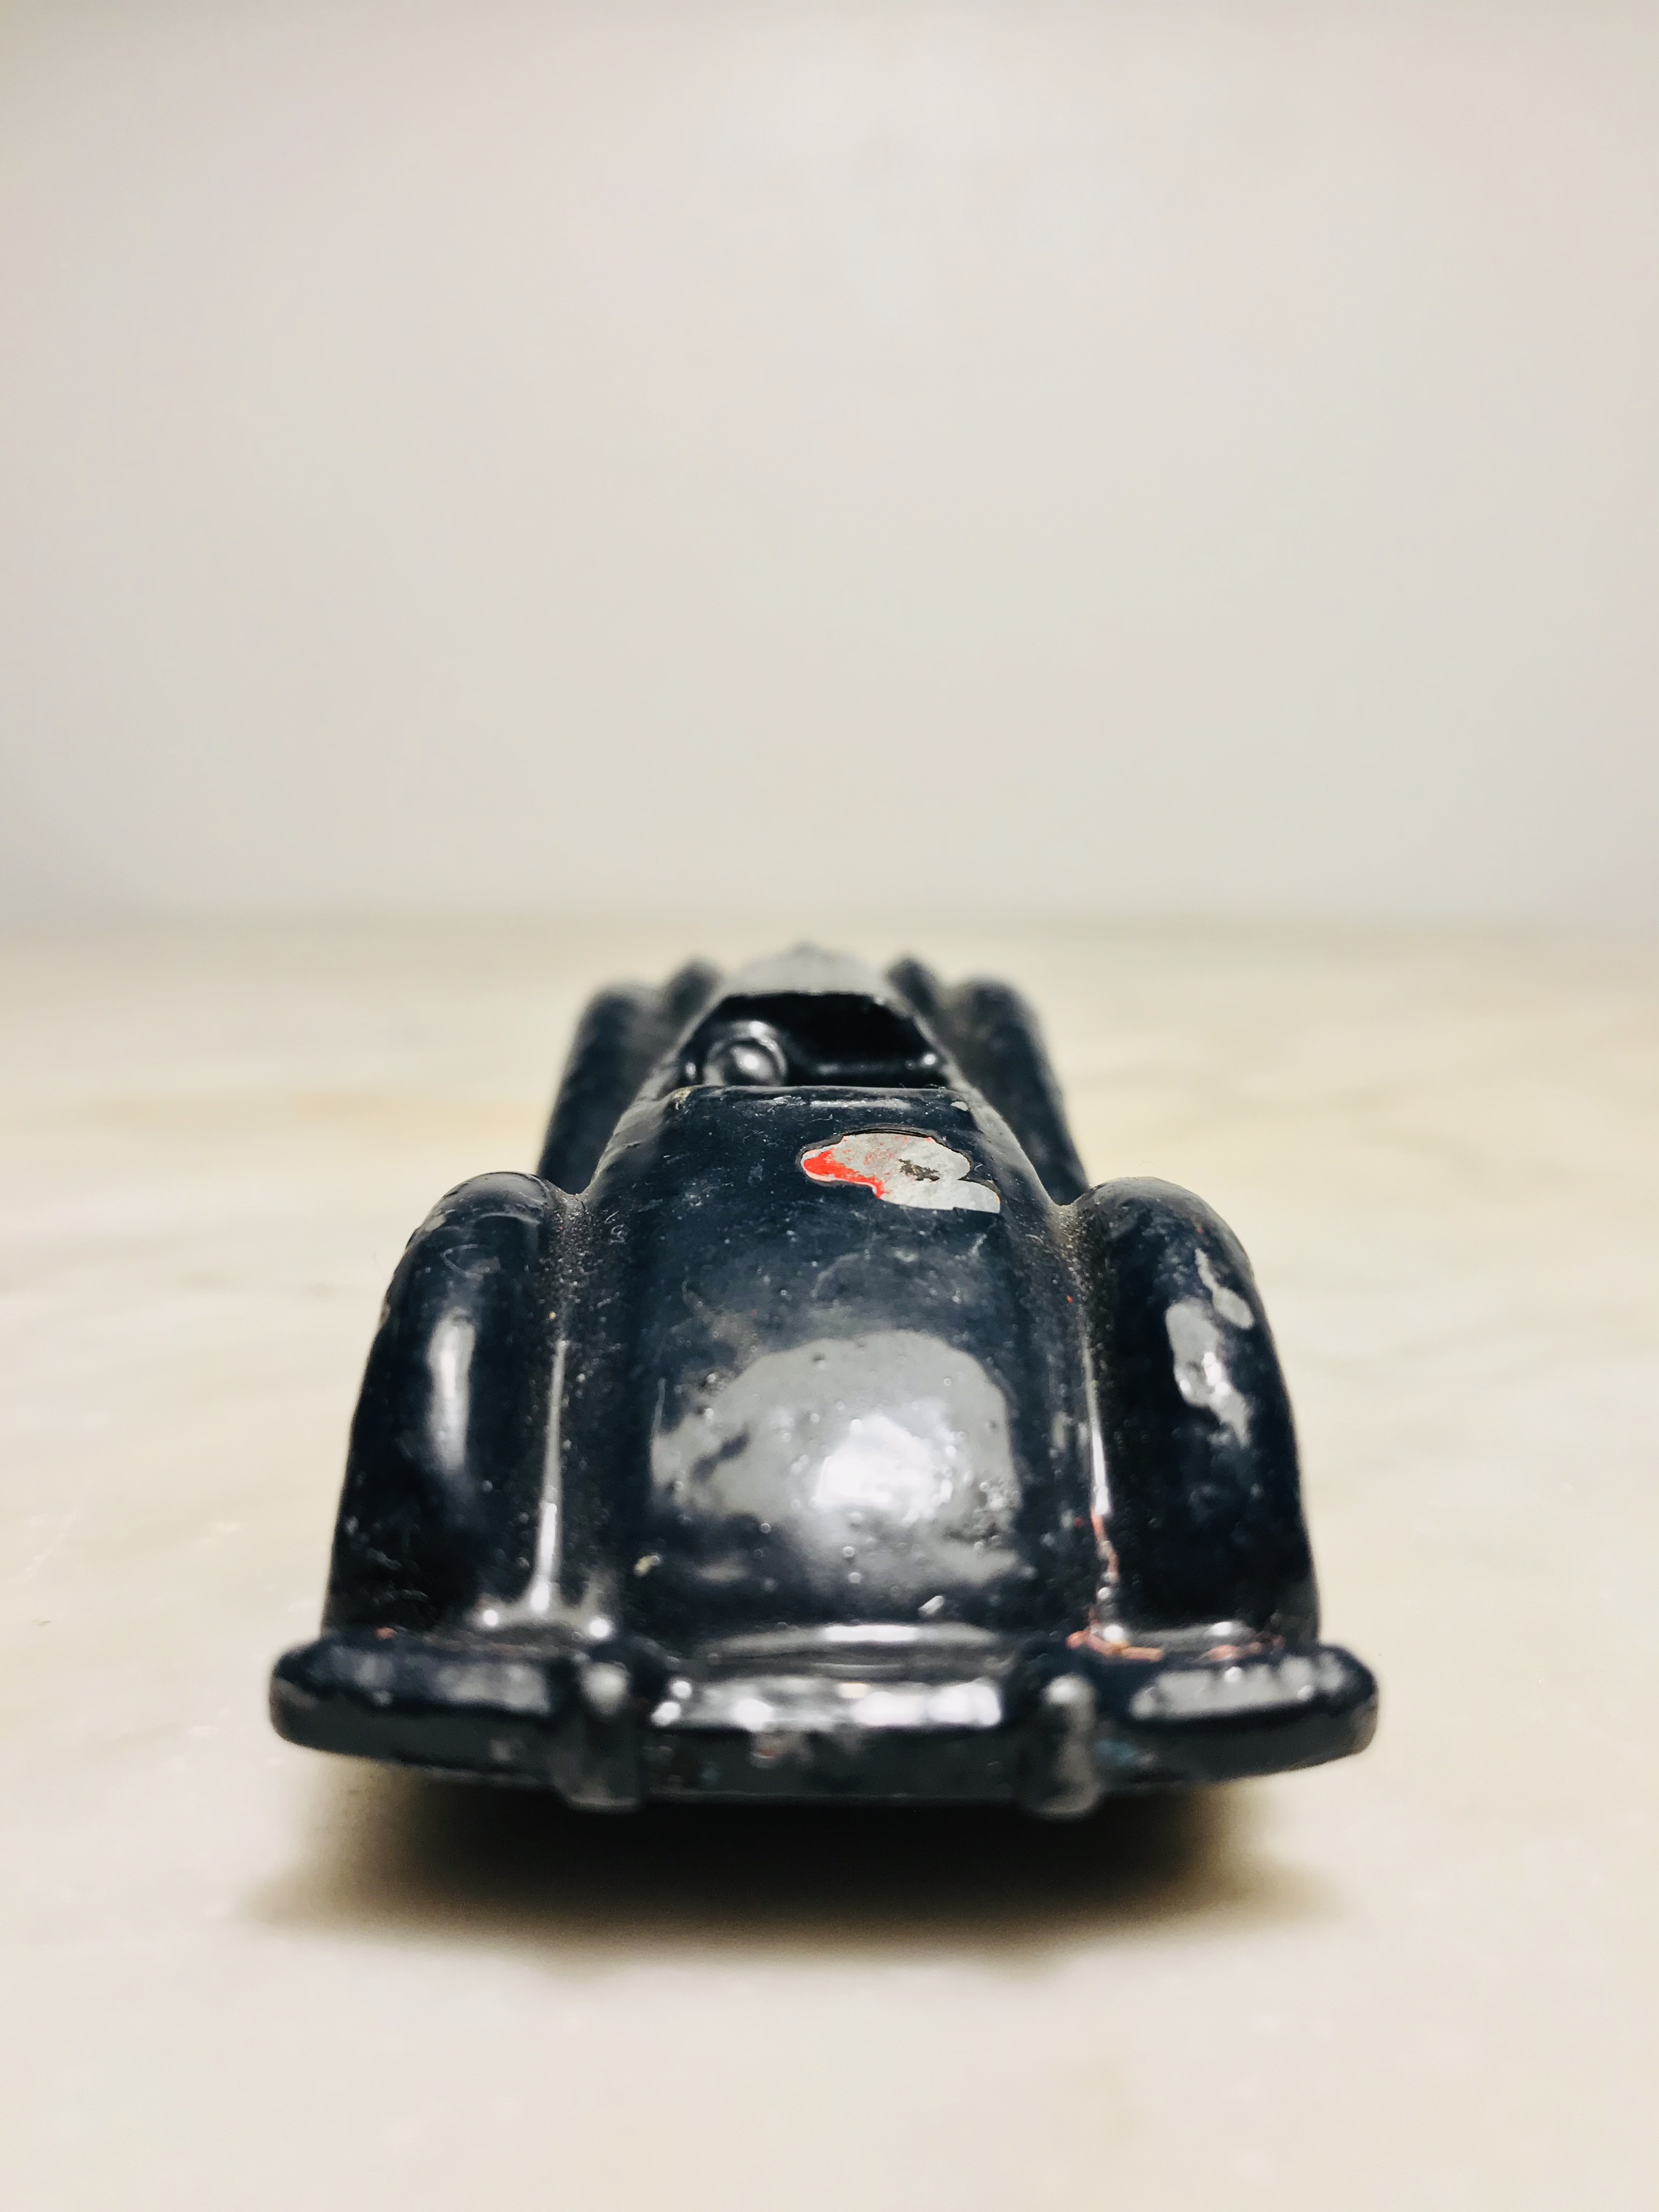 Vintage Toy Automobile